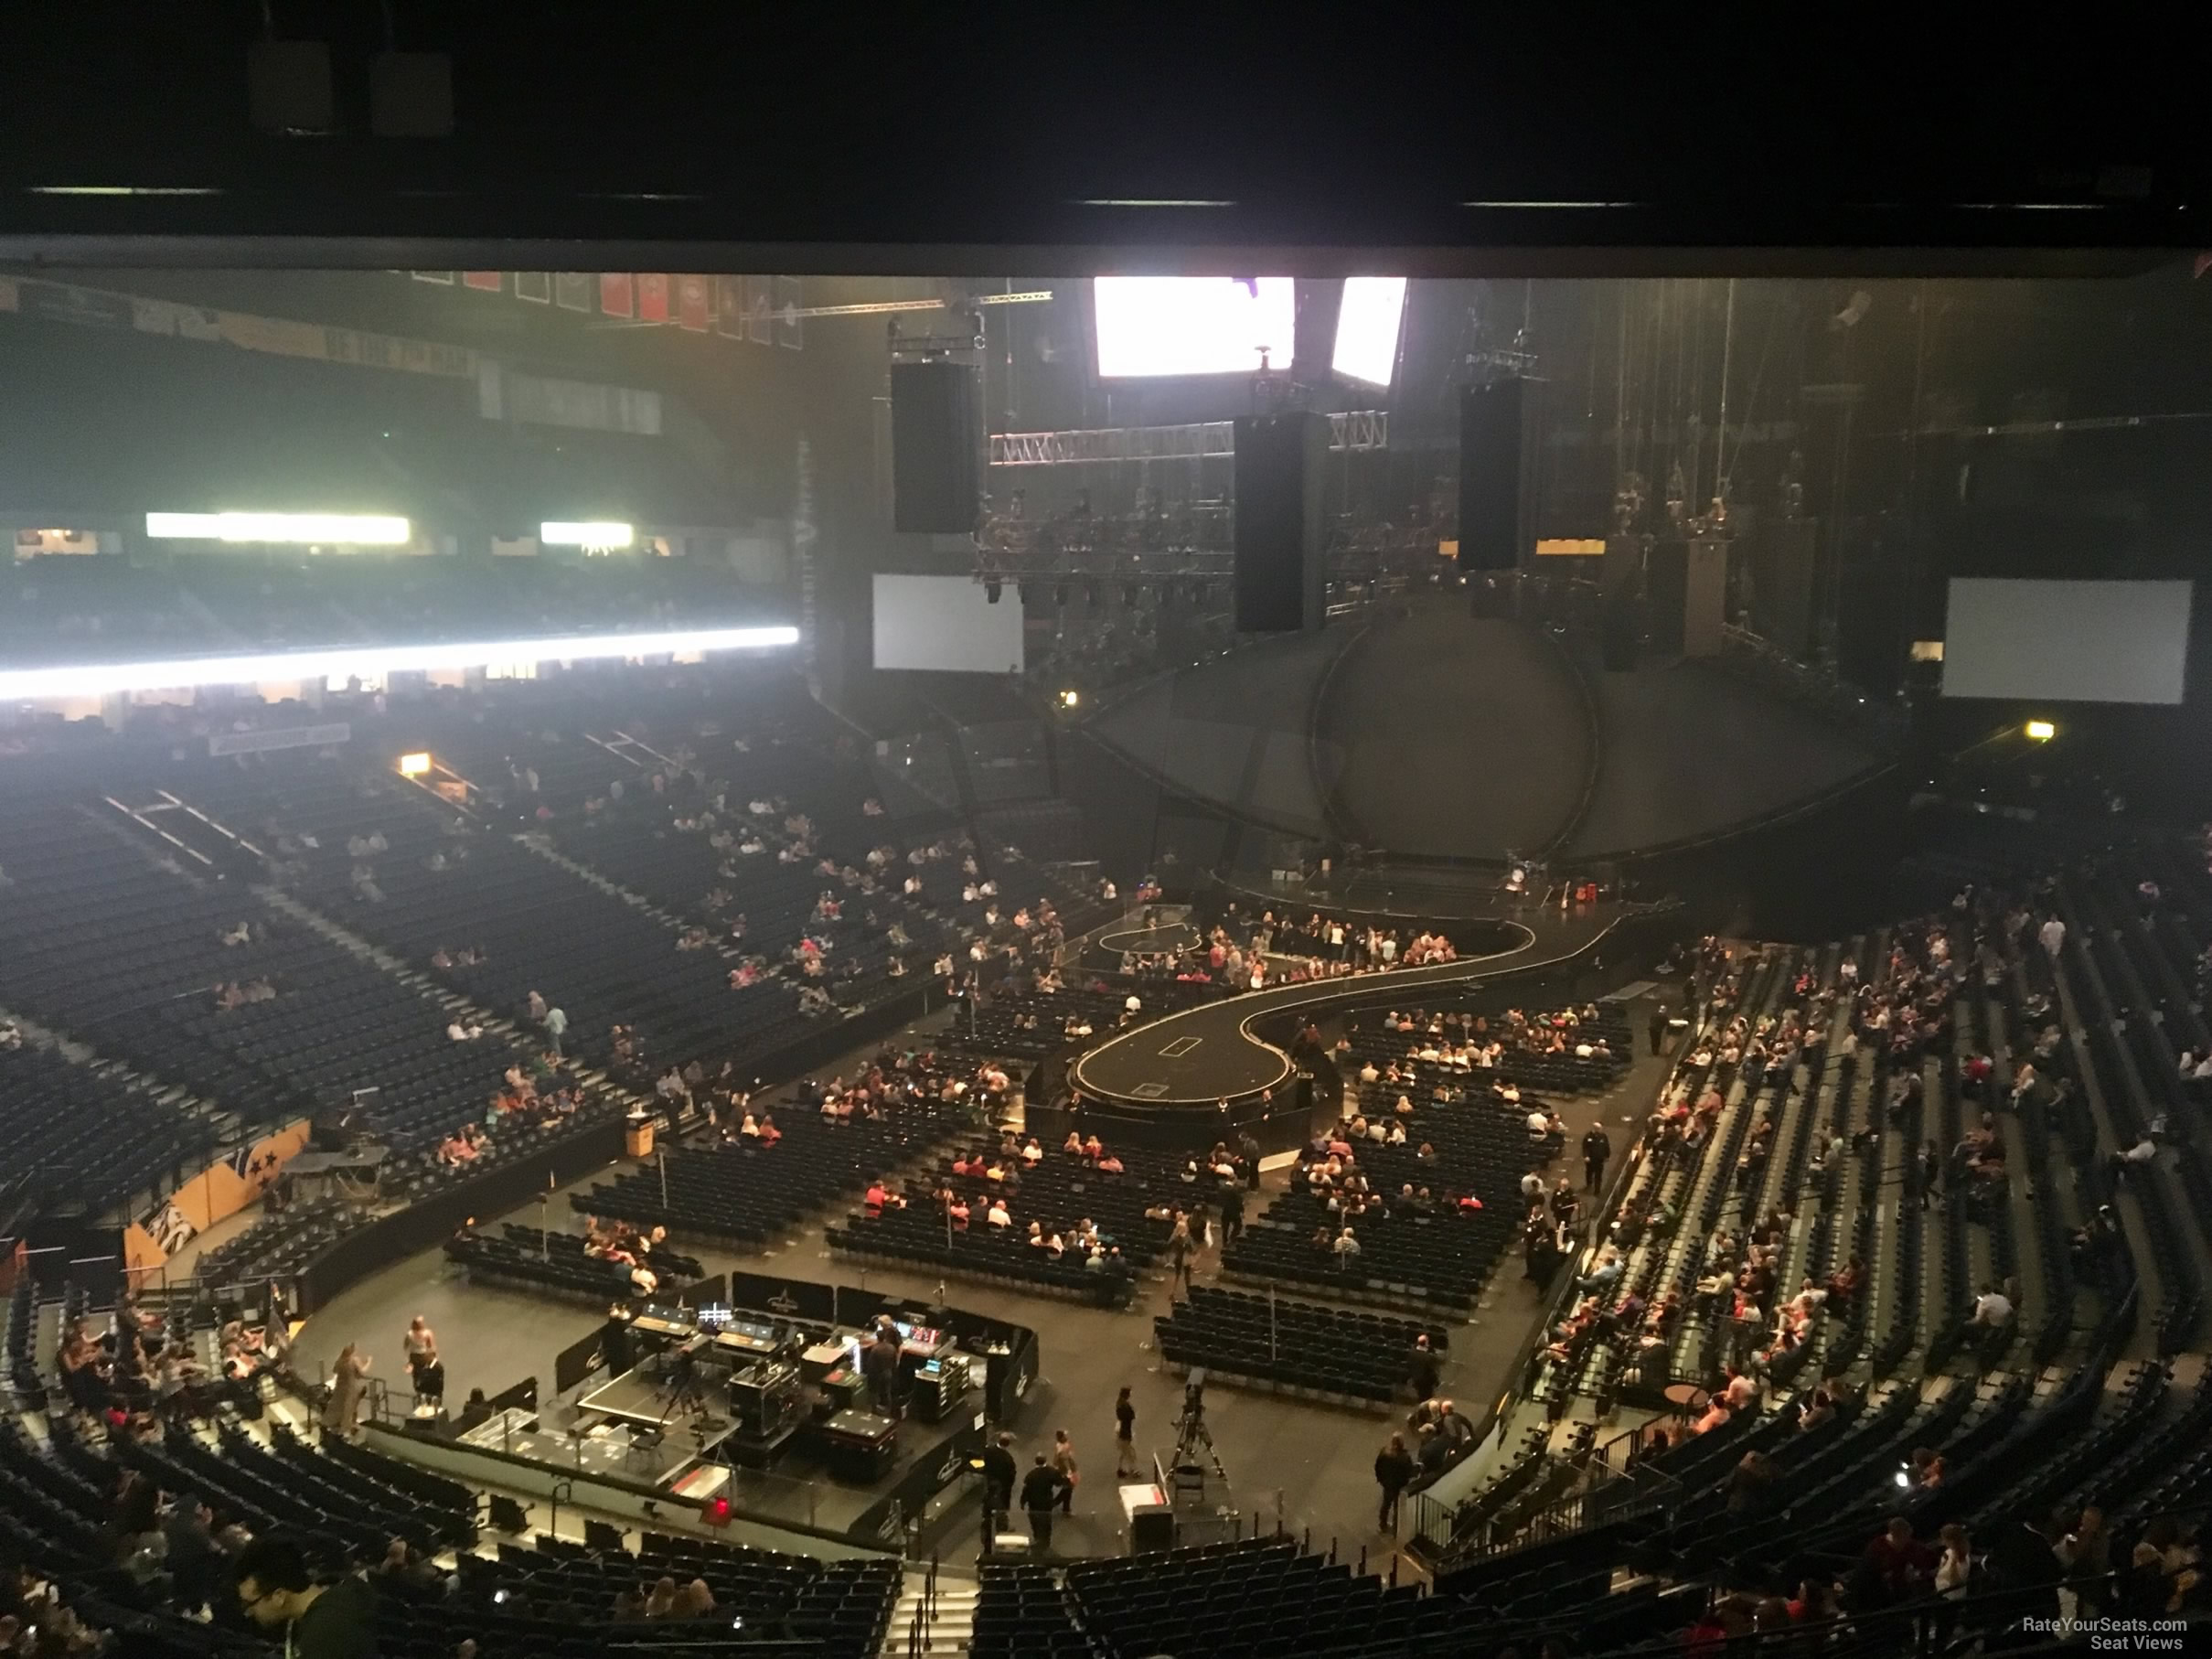 Bridgestone Arena Section 203 Concert Seating - RateYourSeats.com